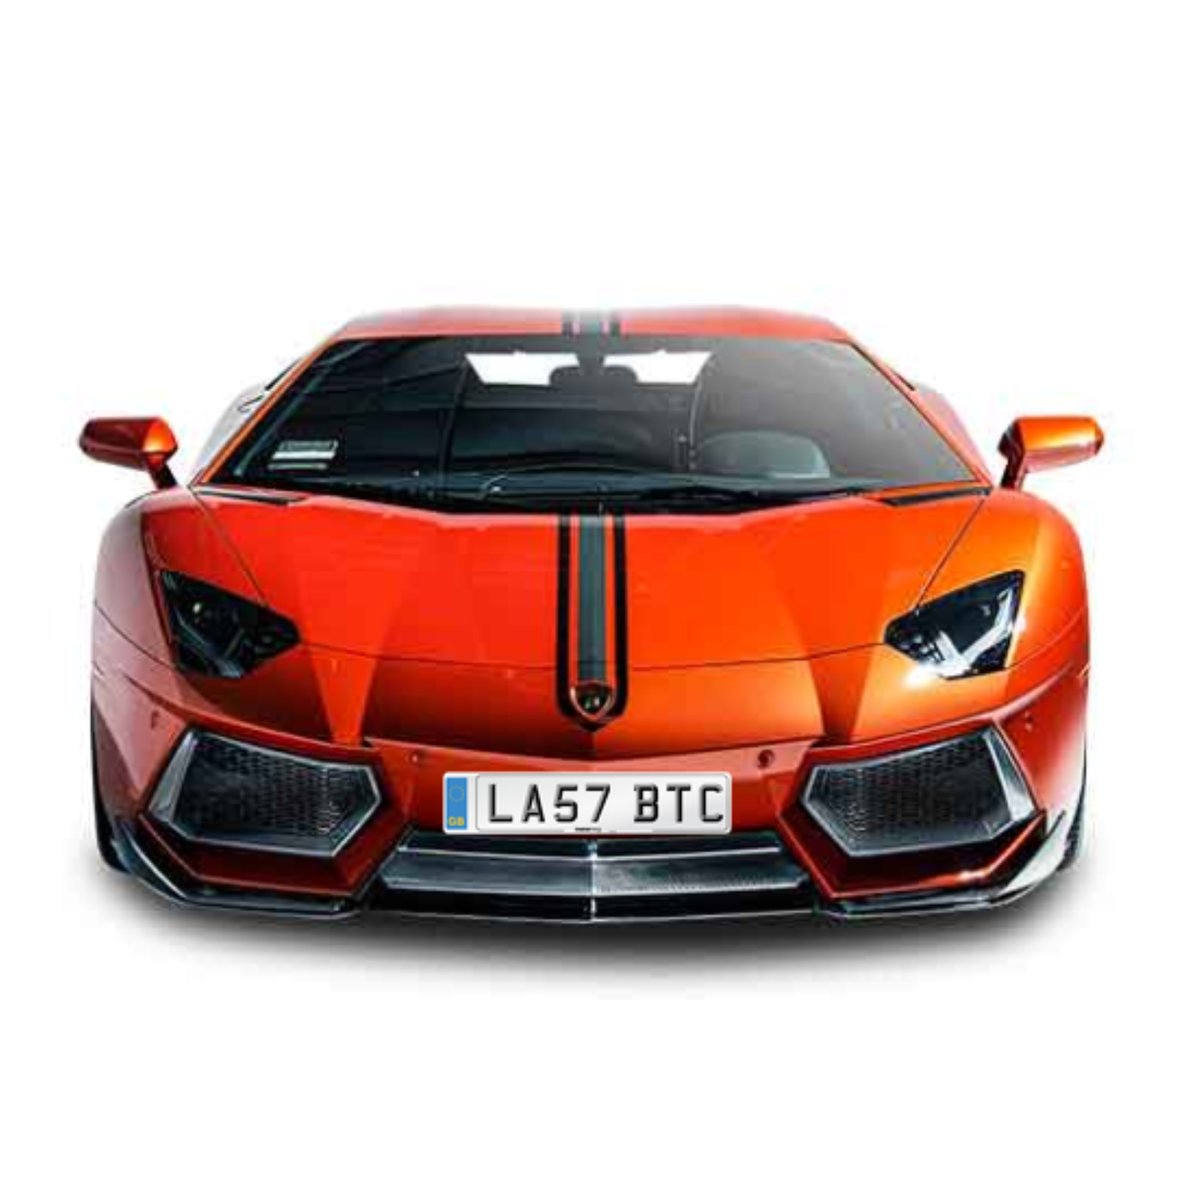 Purchase my LA57 BTC (LAST BTC) UK Cherished Car Number Plate NFT on @rarible  rarible.com/token/polygon/… #rarible #polygon #nonfungible #digitalasset #nft #privateplate #personalisedplate #carregistration #ukcar #ClassicCars #Lamborghini #degen #crypto